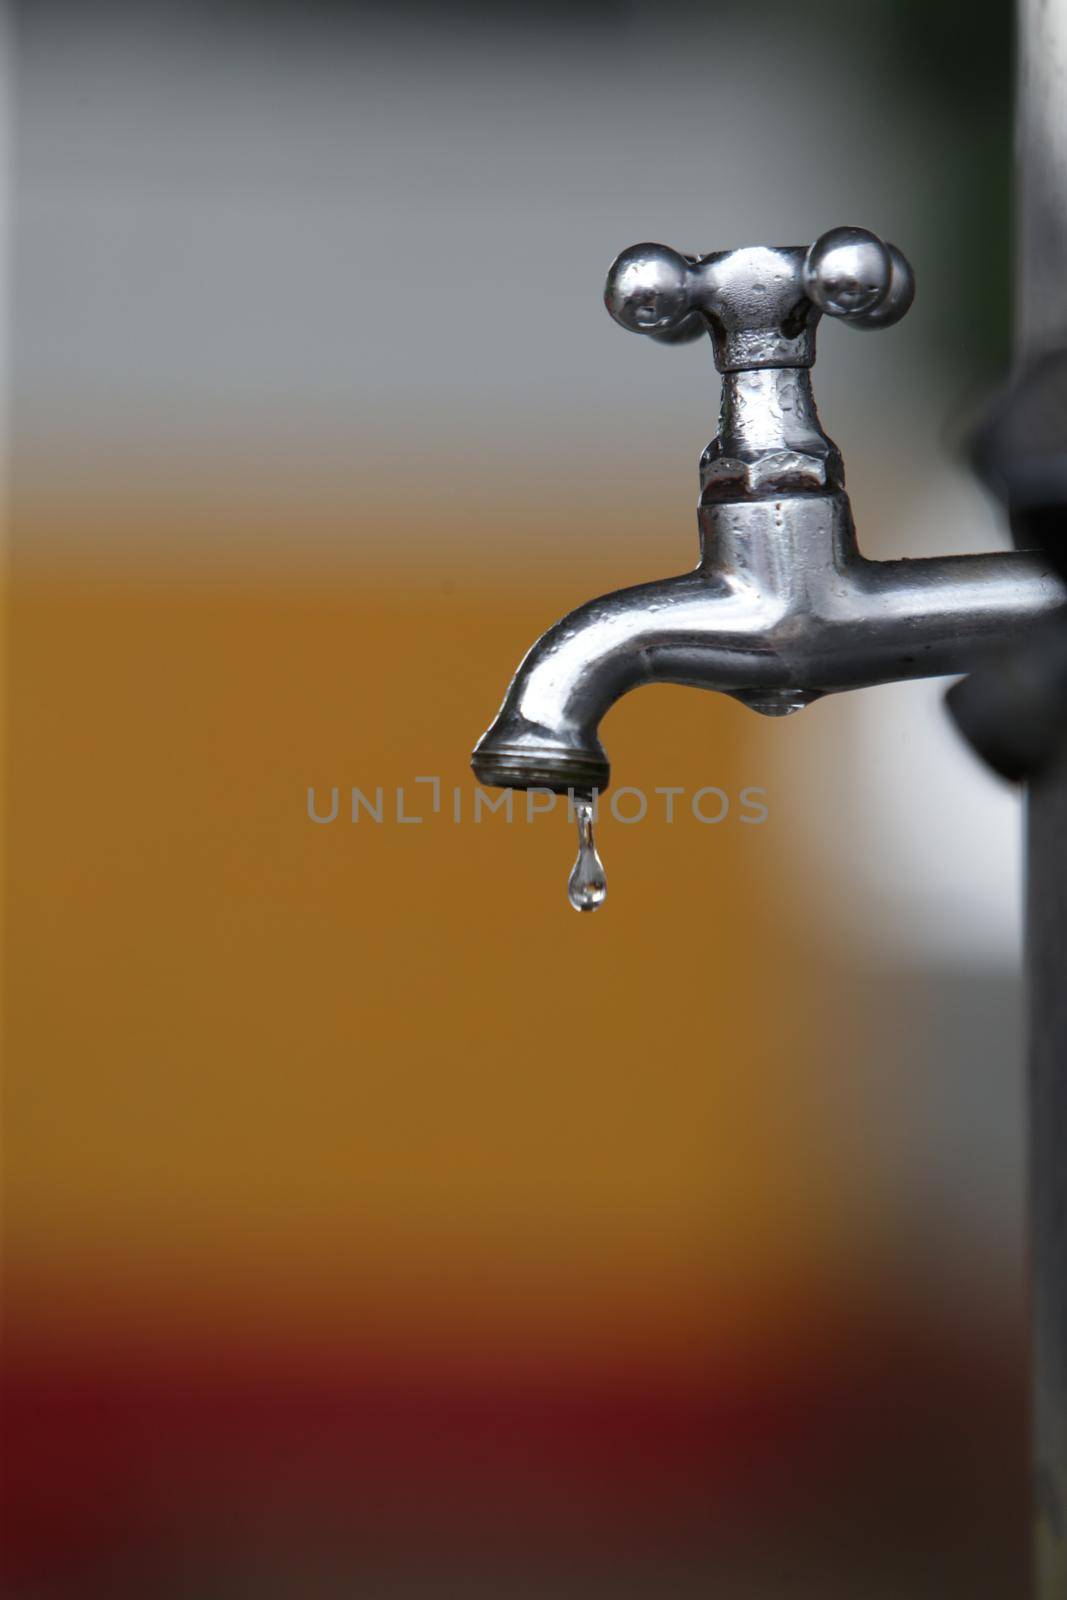 faucet dripping water drop by joasouza